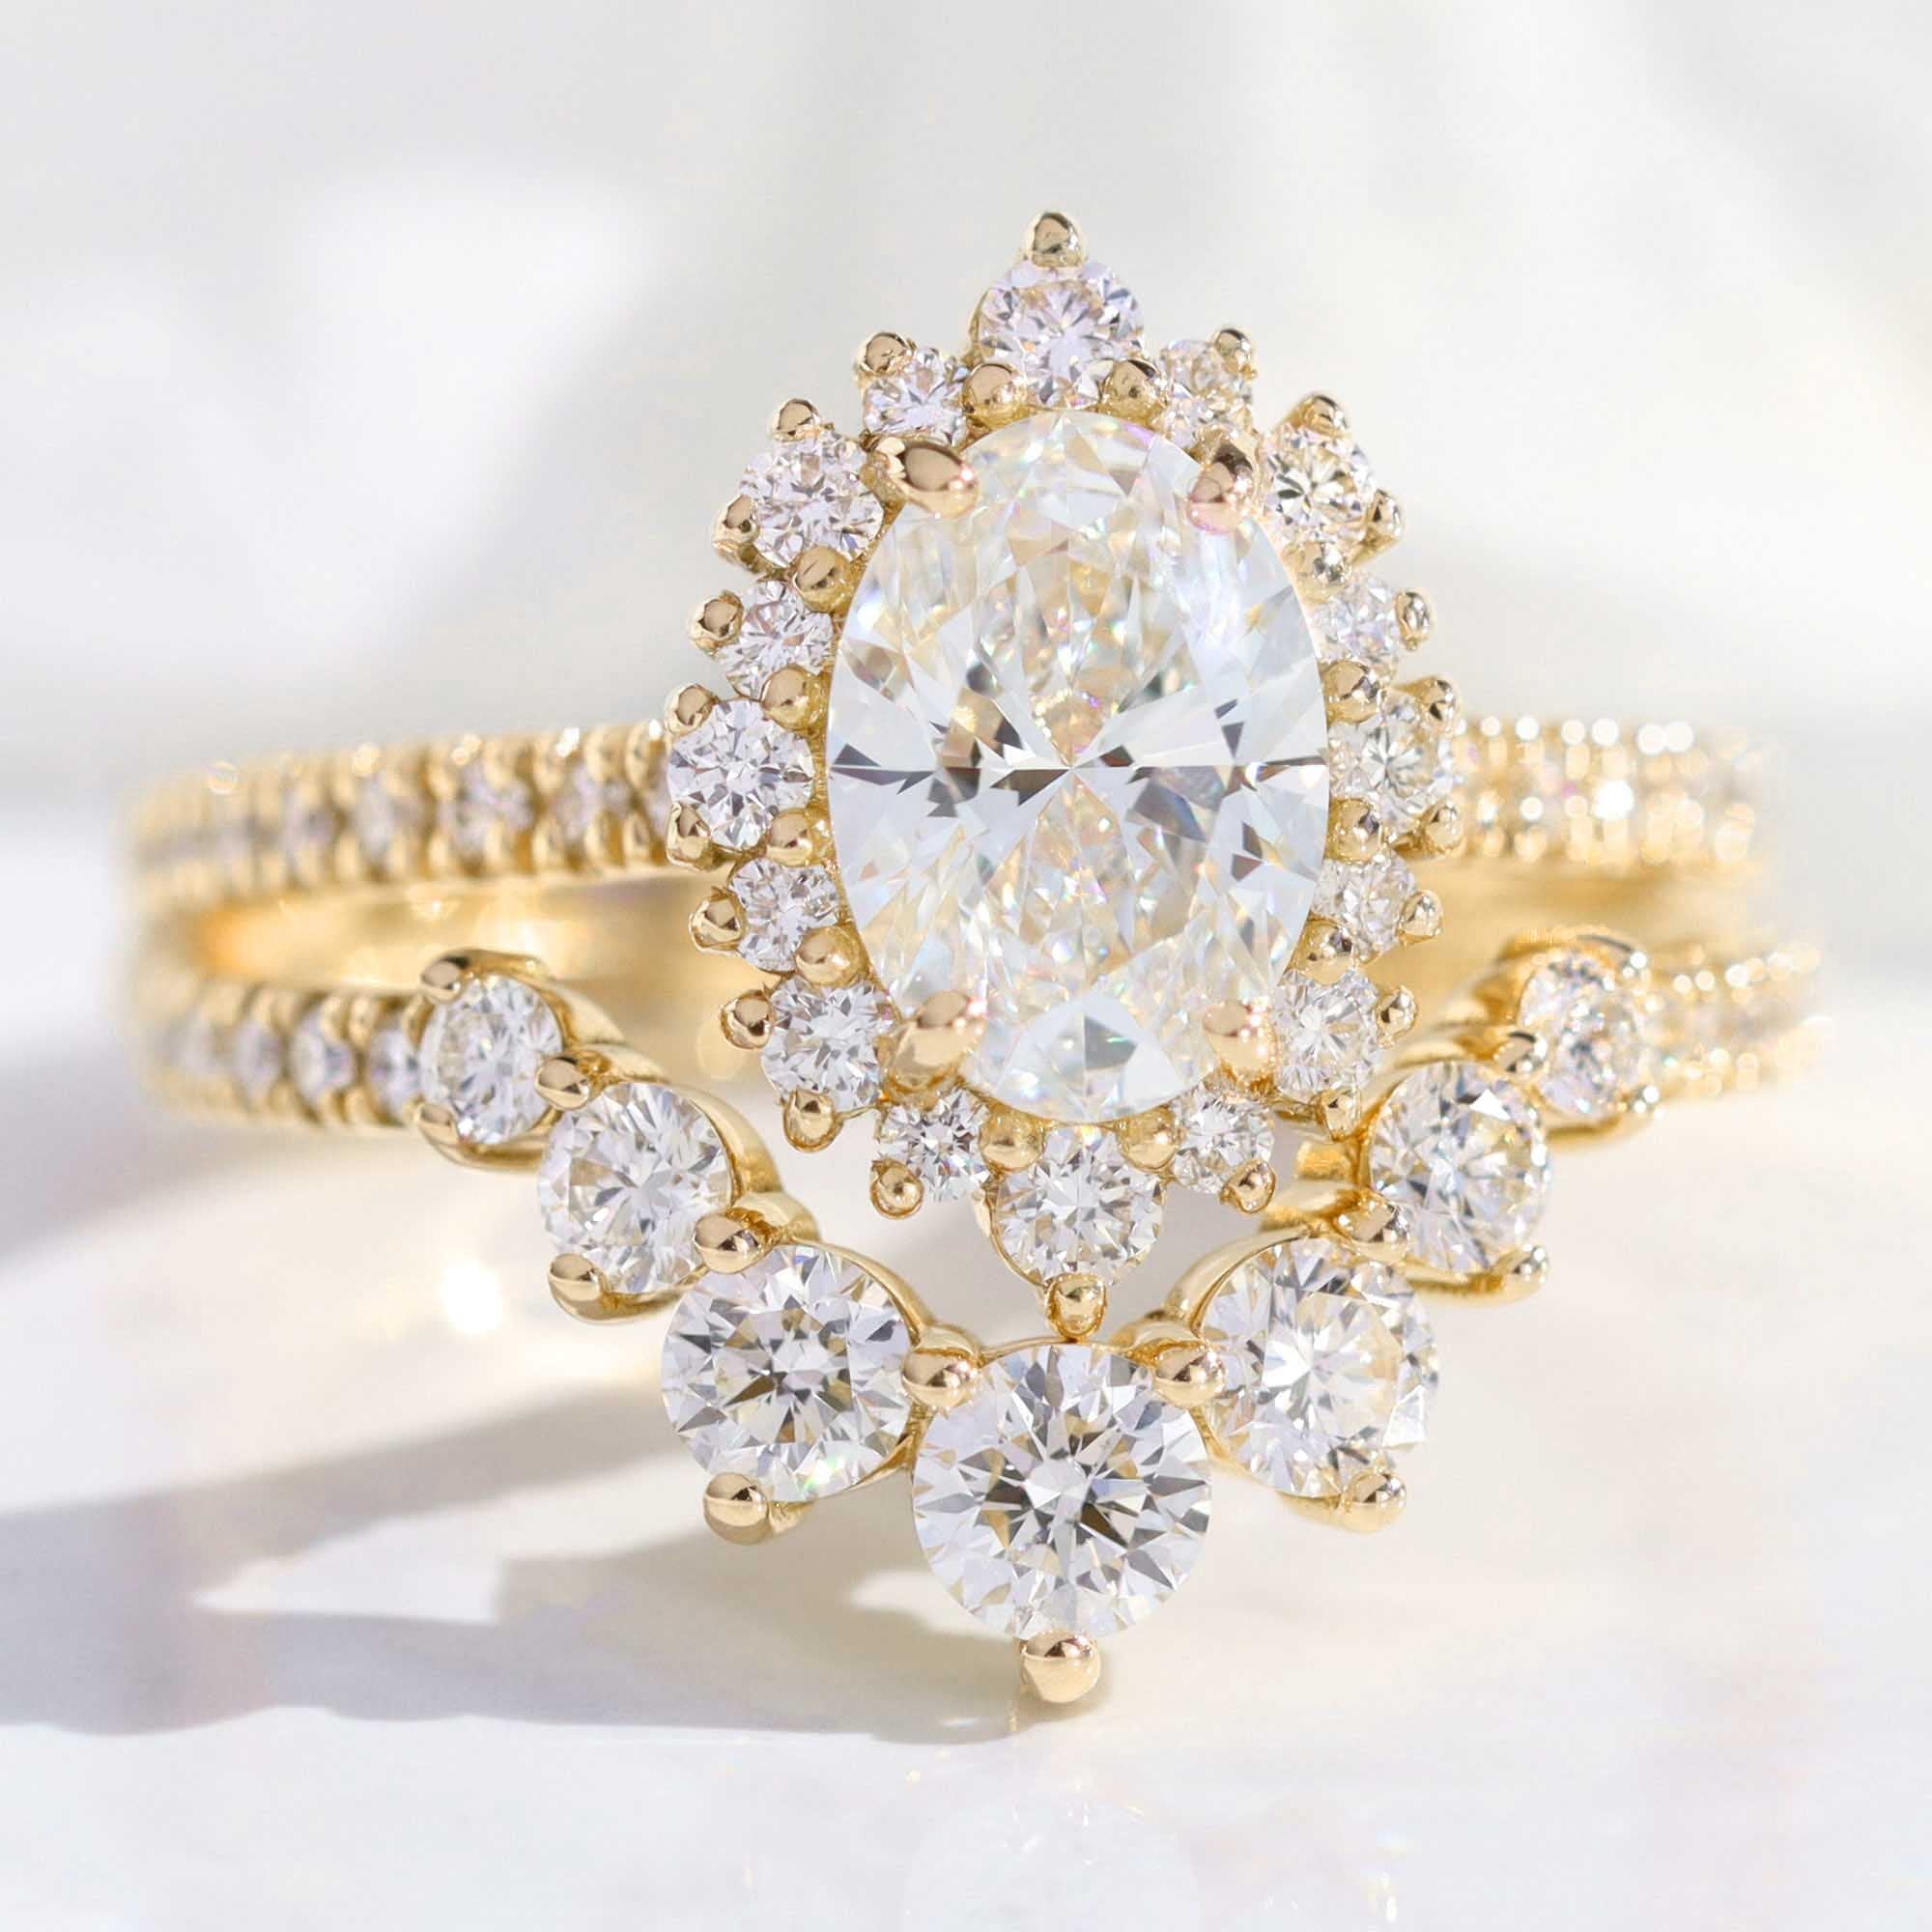 lab diamond ring stack yellow gold halo oval diamond engagement ring set La More Design Jewelry